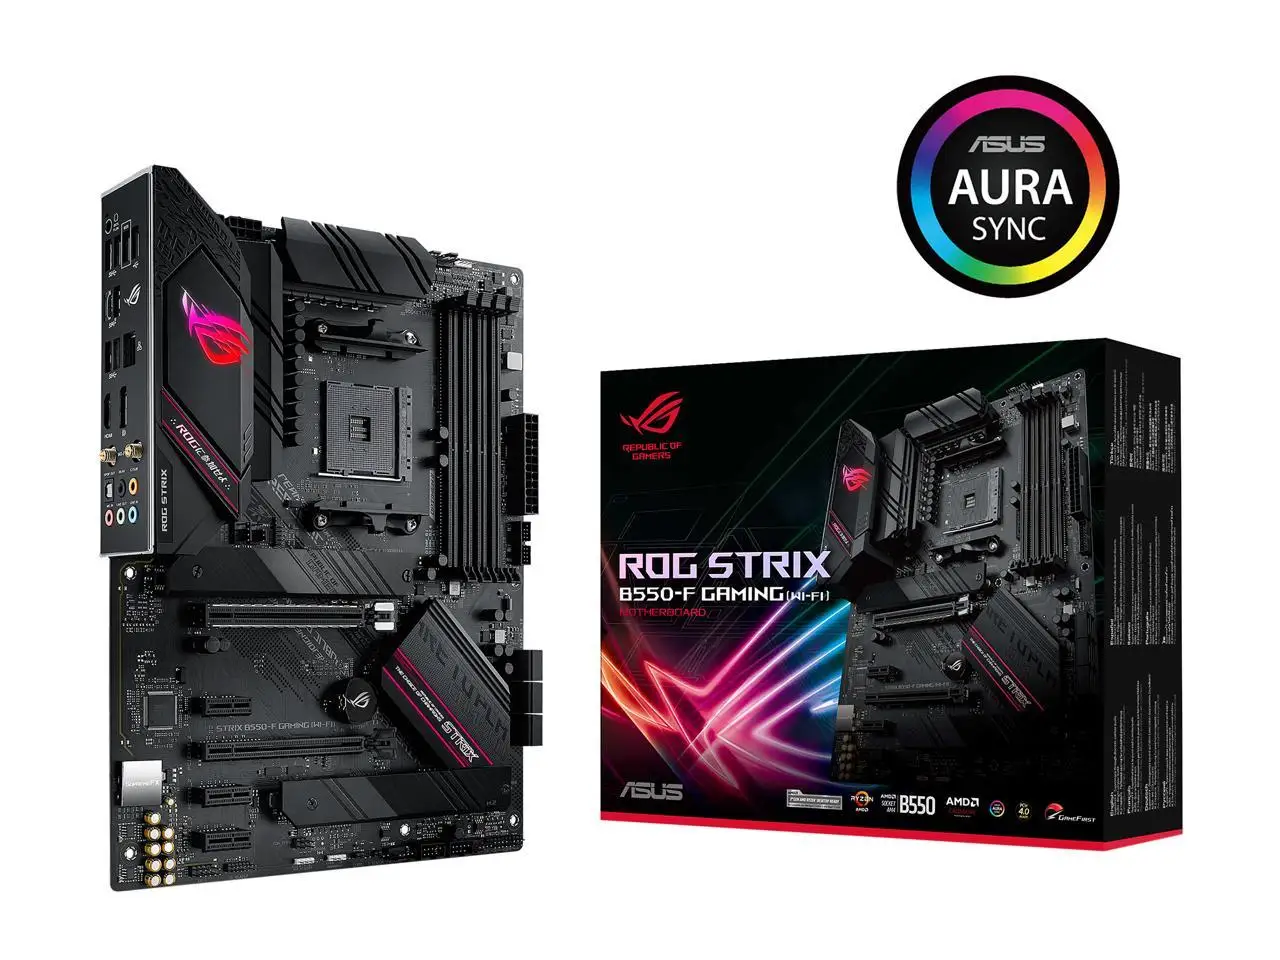 

ASUS ROG Strix B550-F Gaming (WiFi 6) AMD AM4 (3rd Gen Ryzen) ATX Gaming Motherboard (PCIe 4.0, 2.5Gb LAN, BIOS FlashBack, HDMI